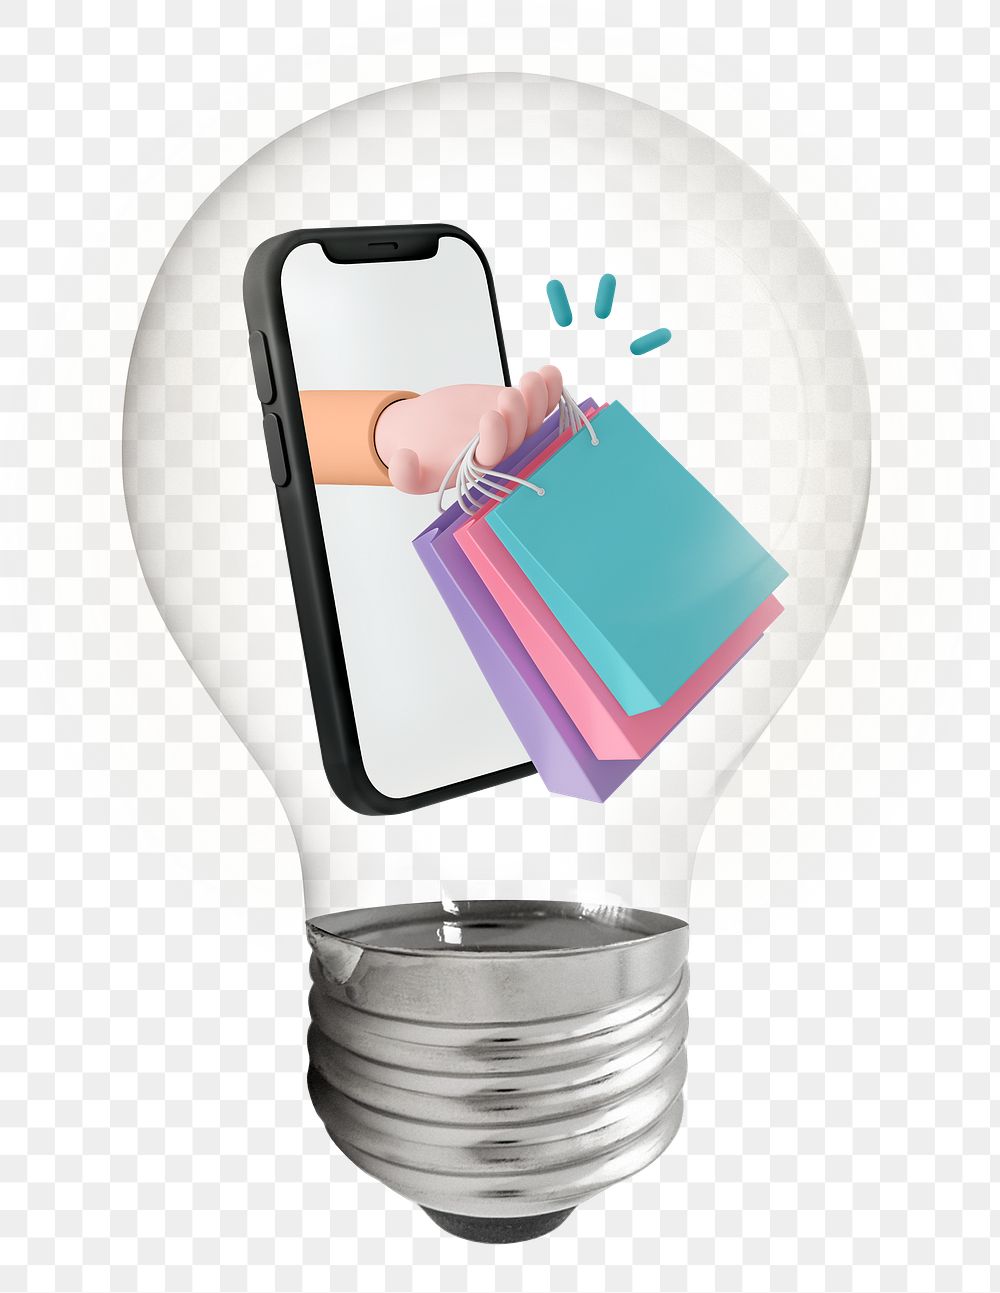 Png 3D online shopping sticker, light bulb lifestyle creative illustration on transparent background